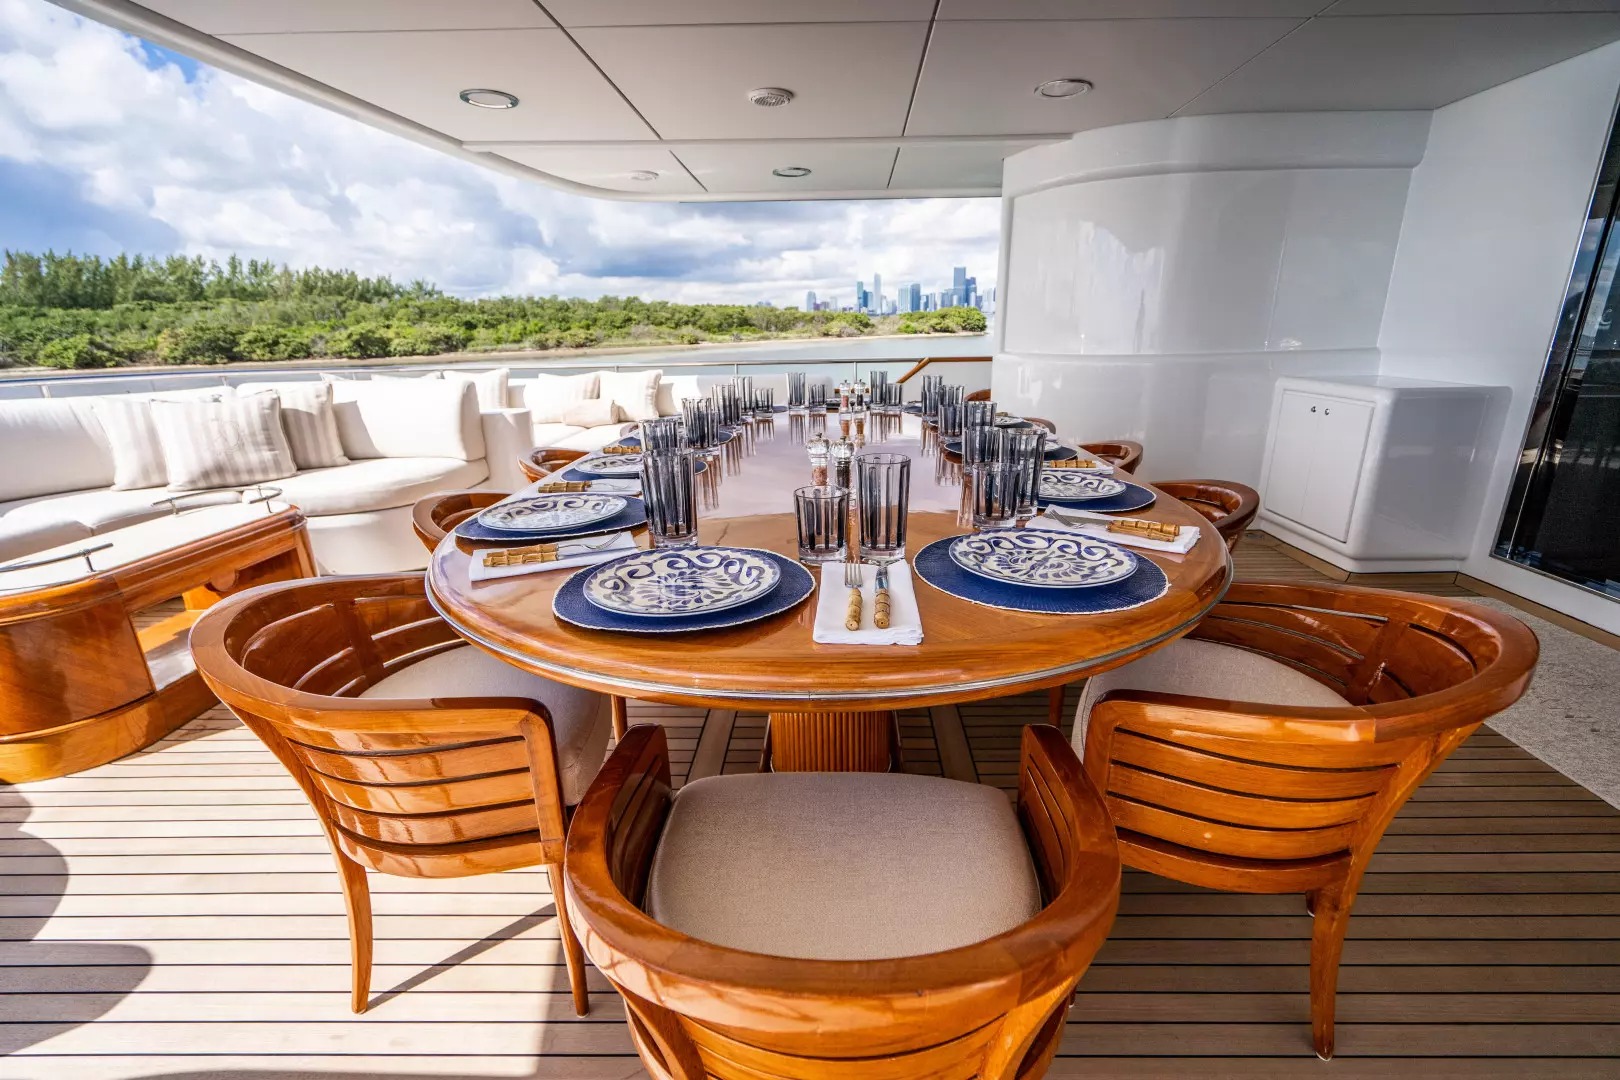 Upper deck stylish dining setting